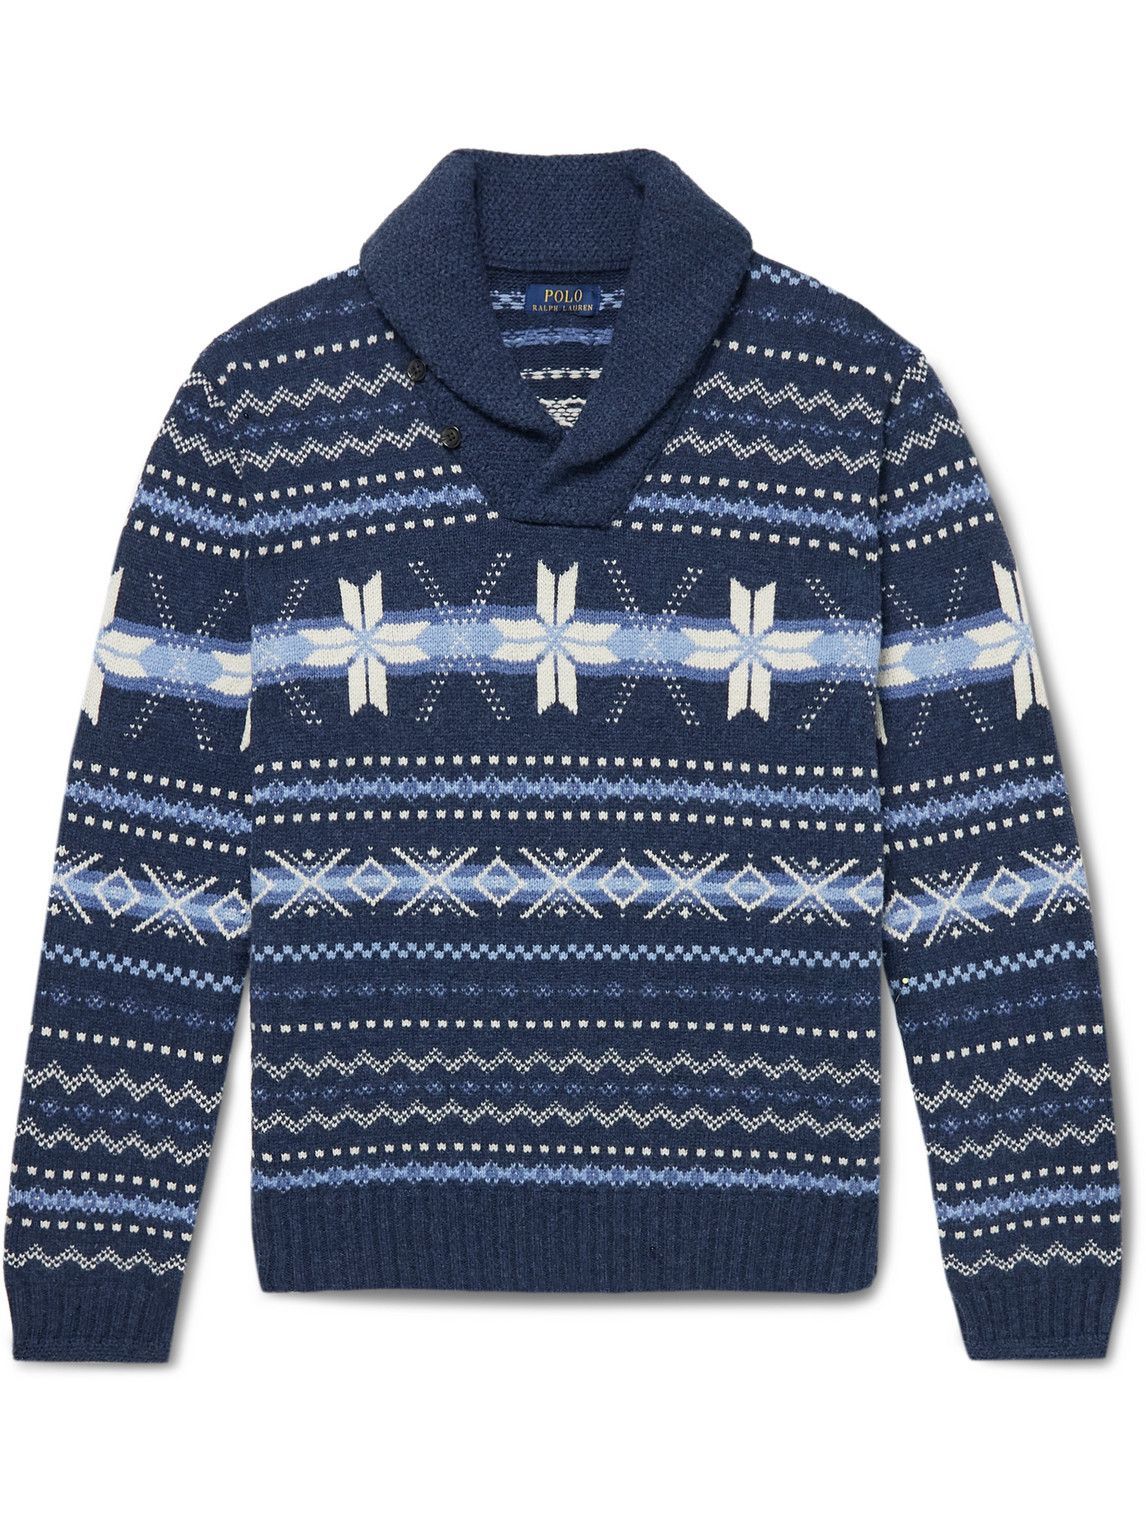 Polo Ralph Lauren - Shawl-Collar Fair Isle Wool Sweater - Blue